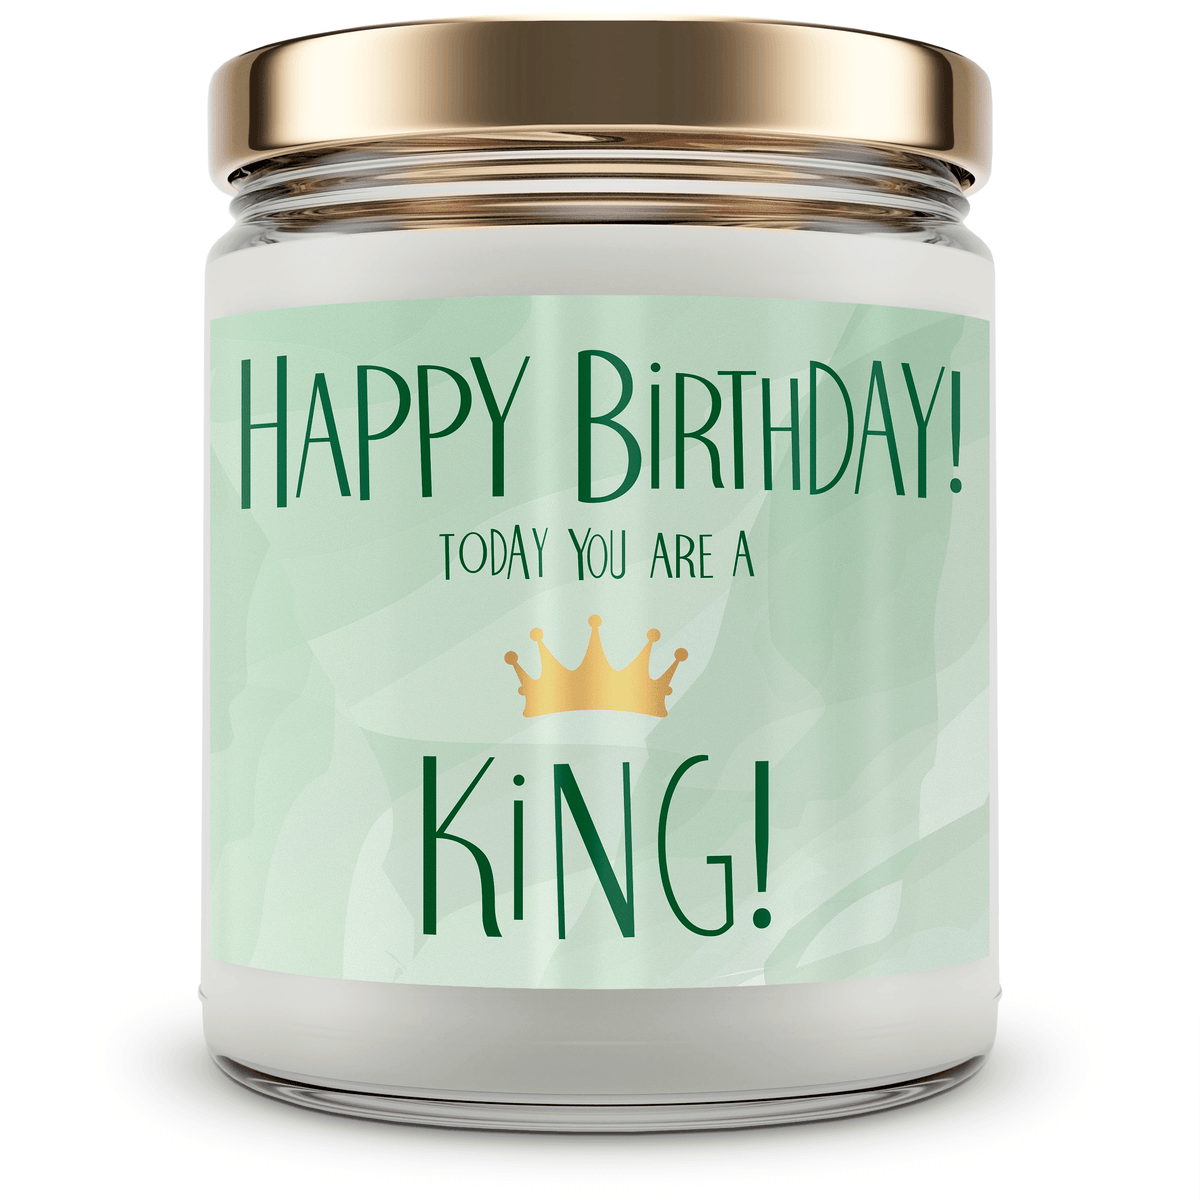 Happy Birthday KING! - Mint Sugar Candle